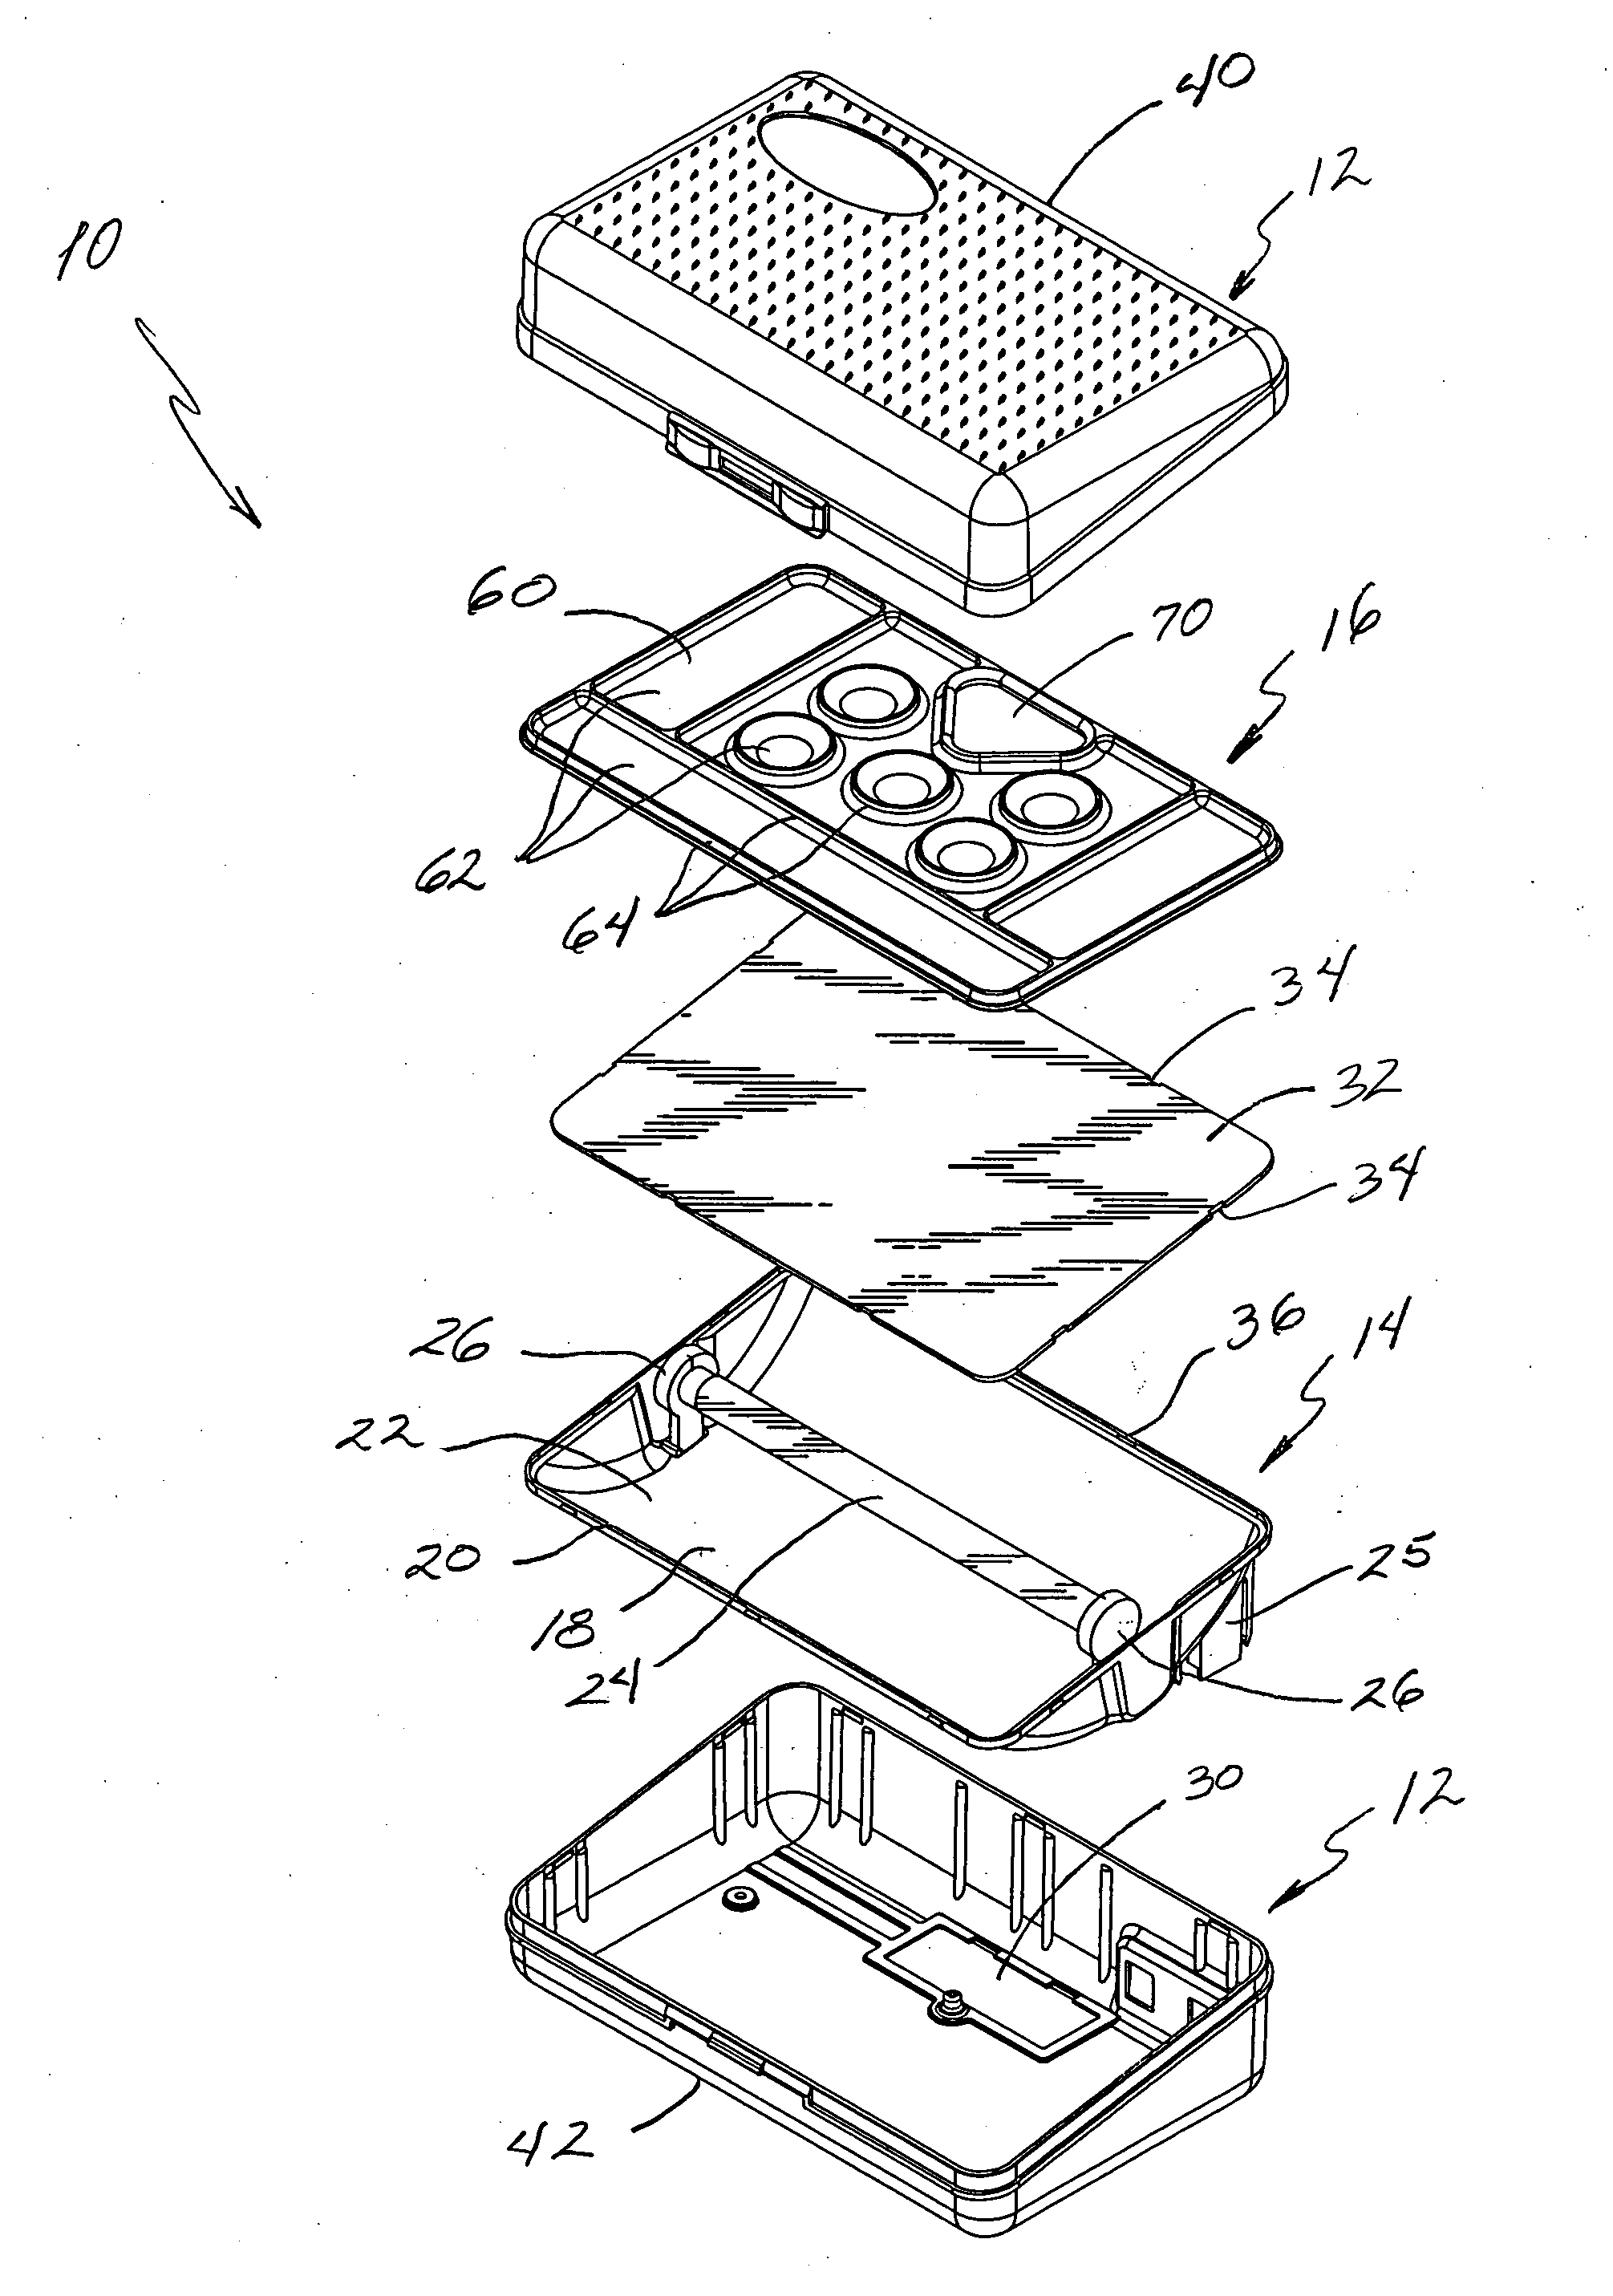 Portable light box